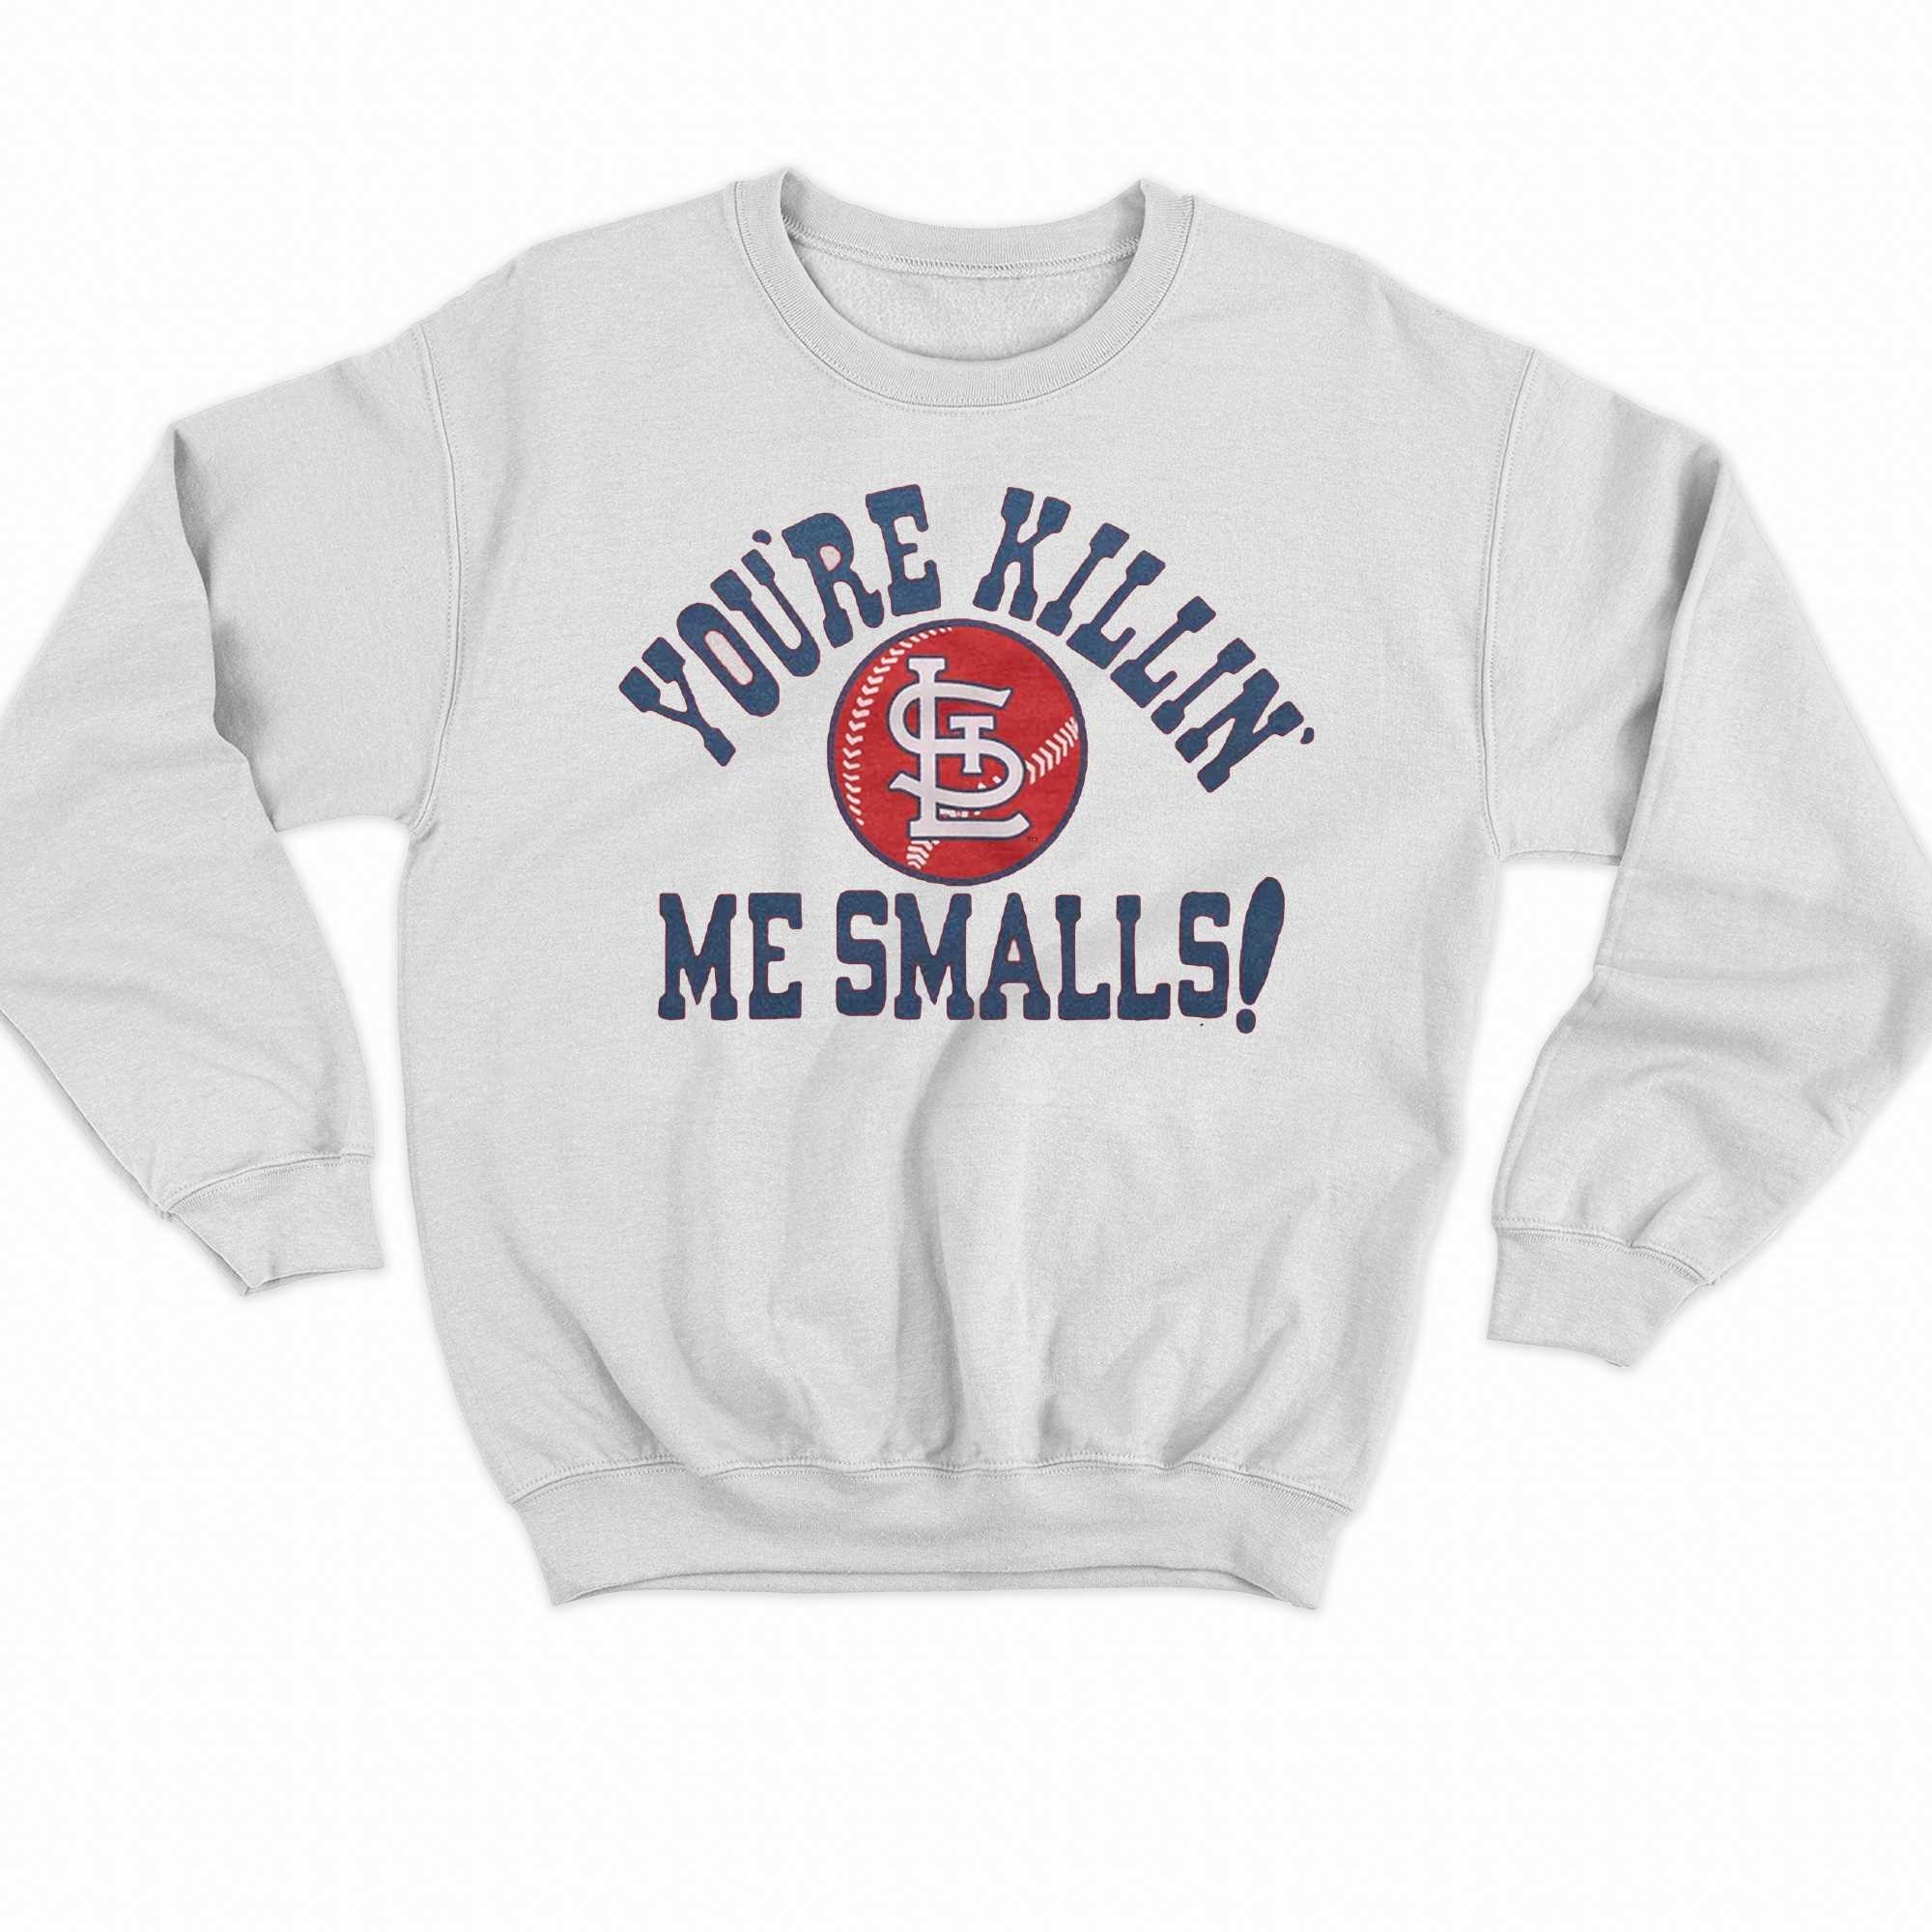 St Louis Hoodies & Sweatshirts, Unique Designs